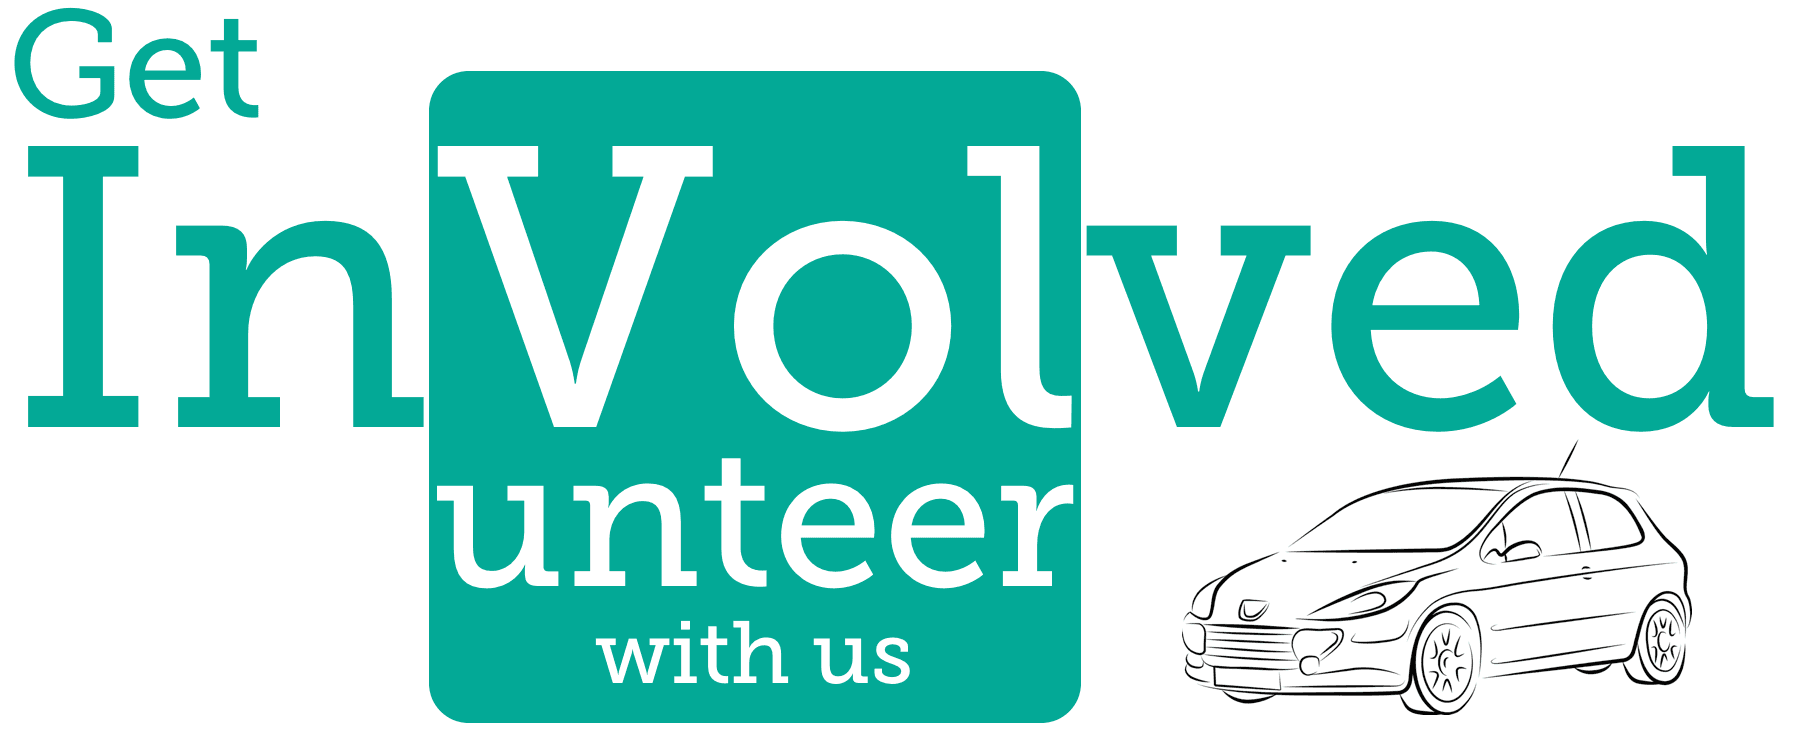 Volunteer for The Speyside Community Car Sharing Scheme